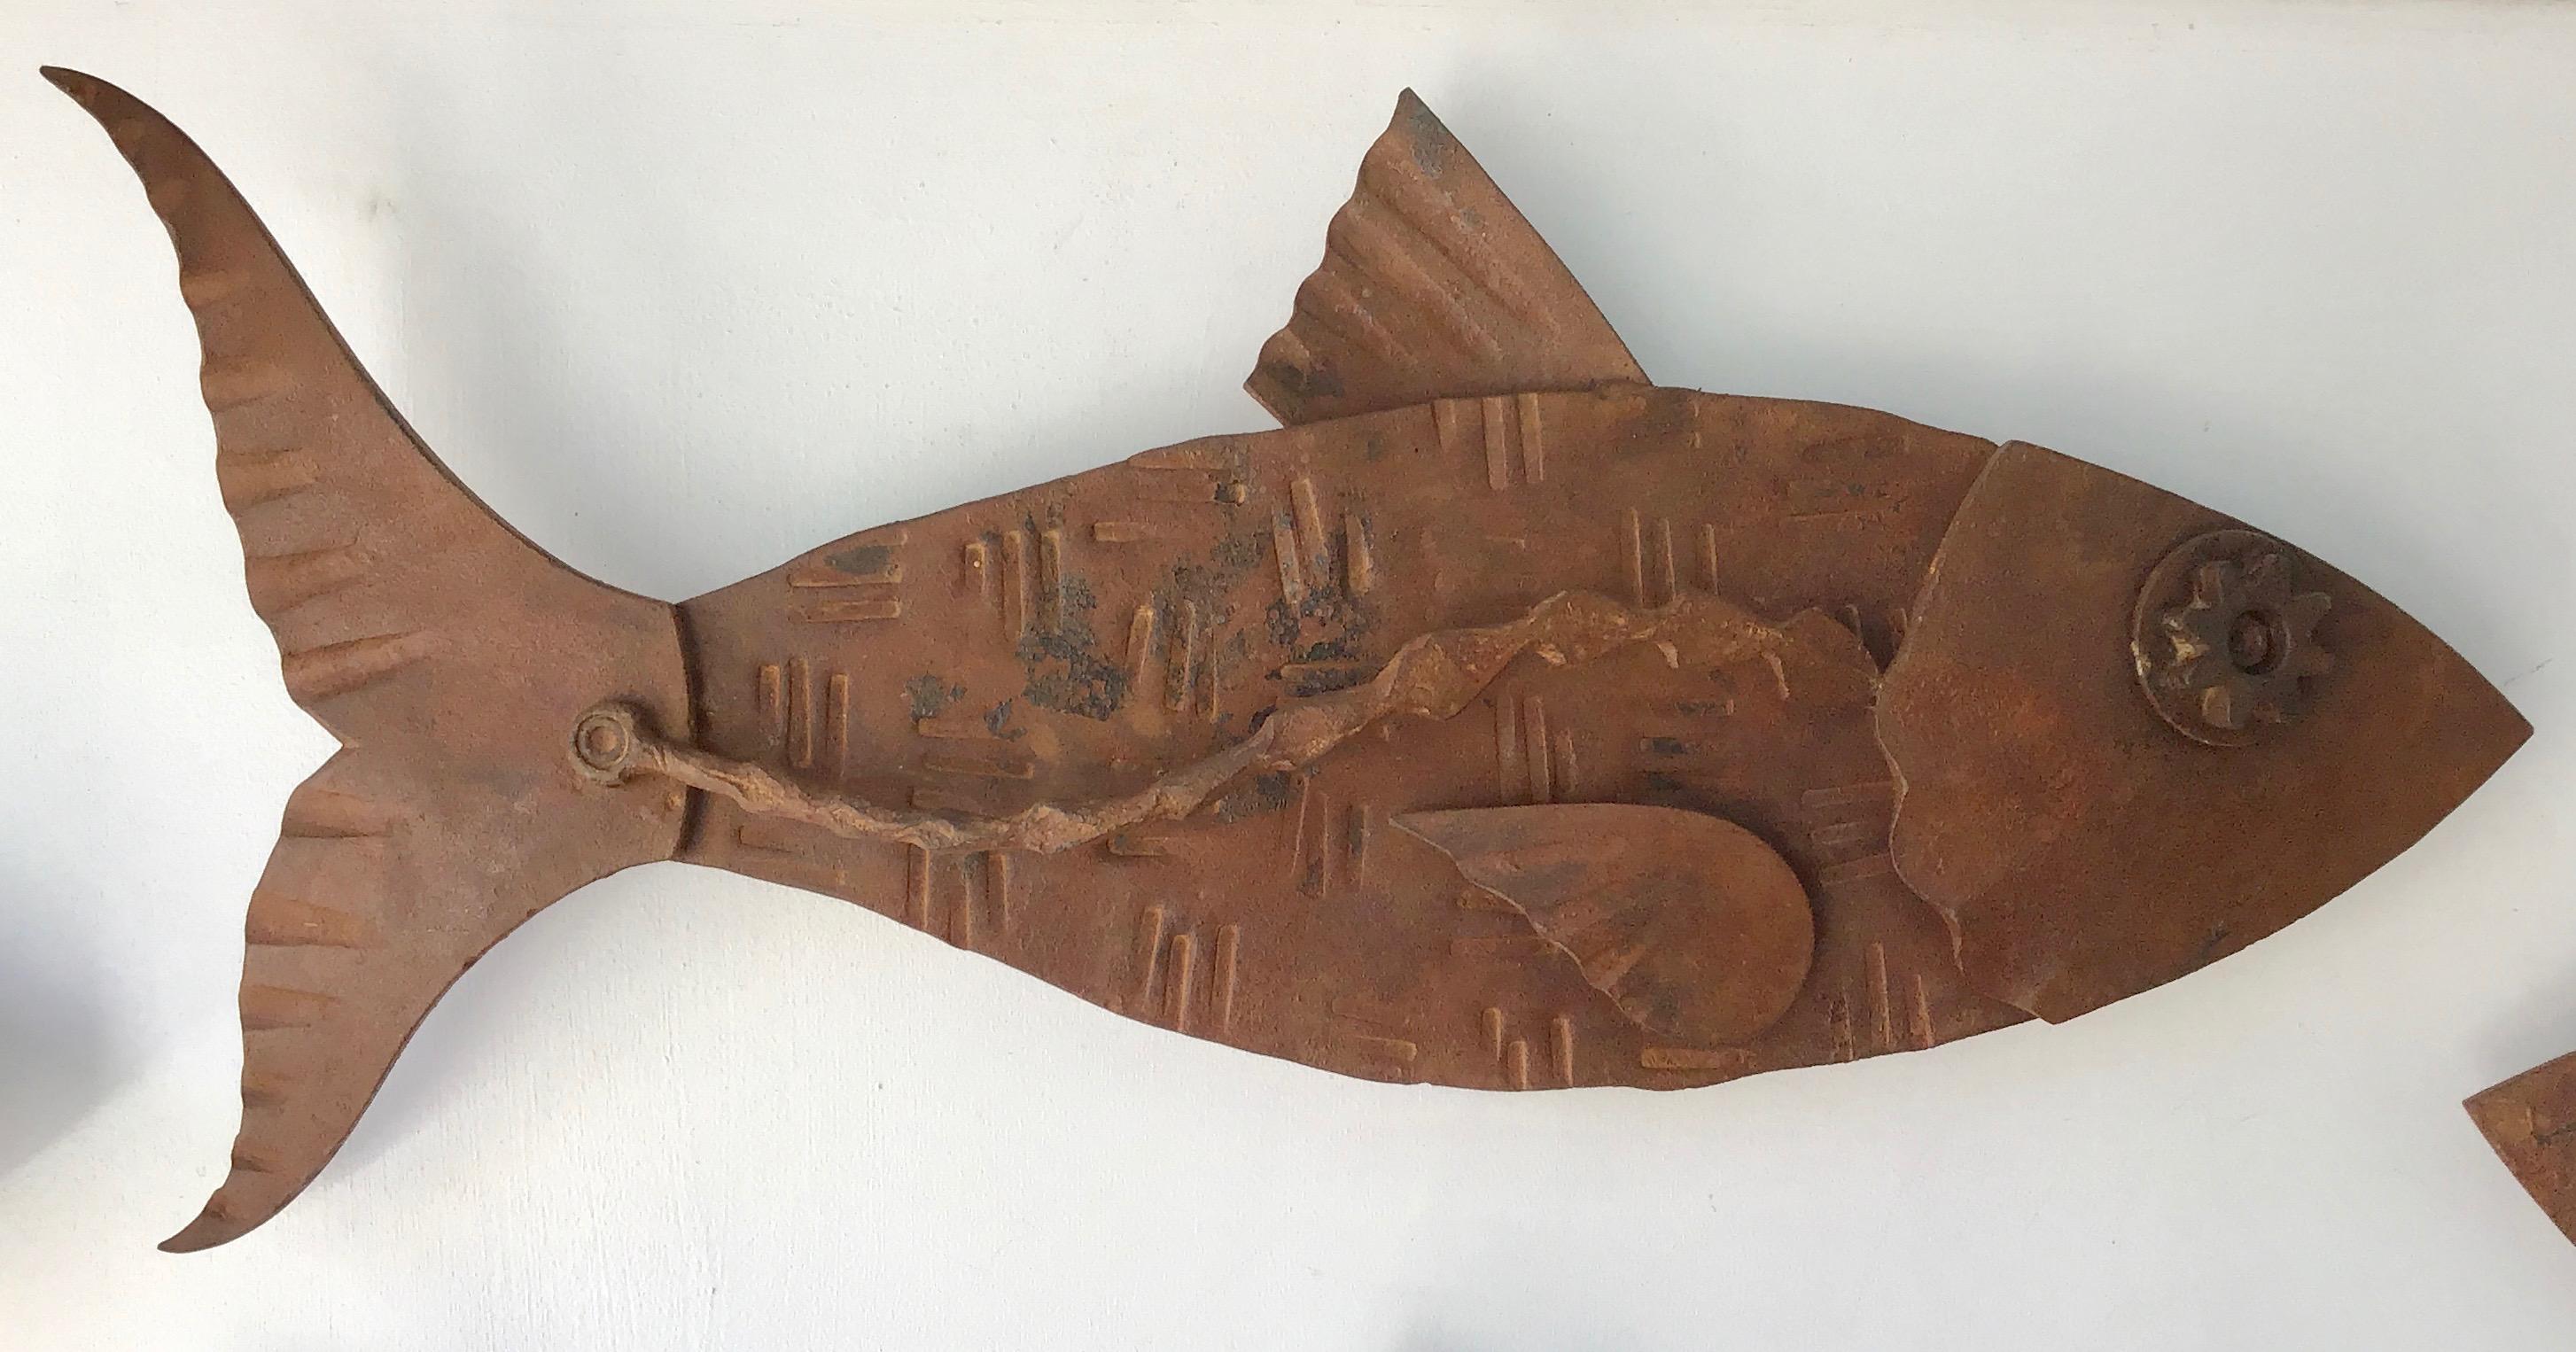 Hugh Holborn Figurative Sculpture - "Alubulidae 4" Hand forged salvaged steel fish wall sculpture